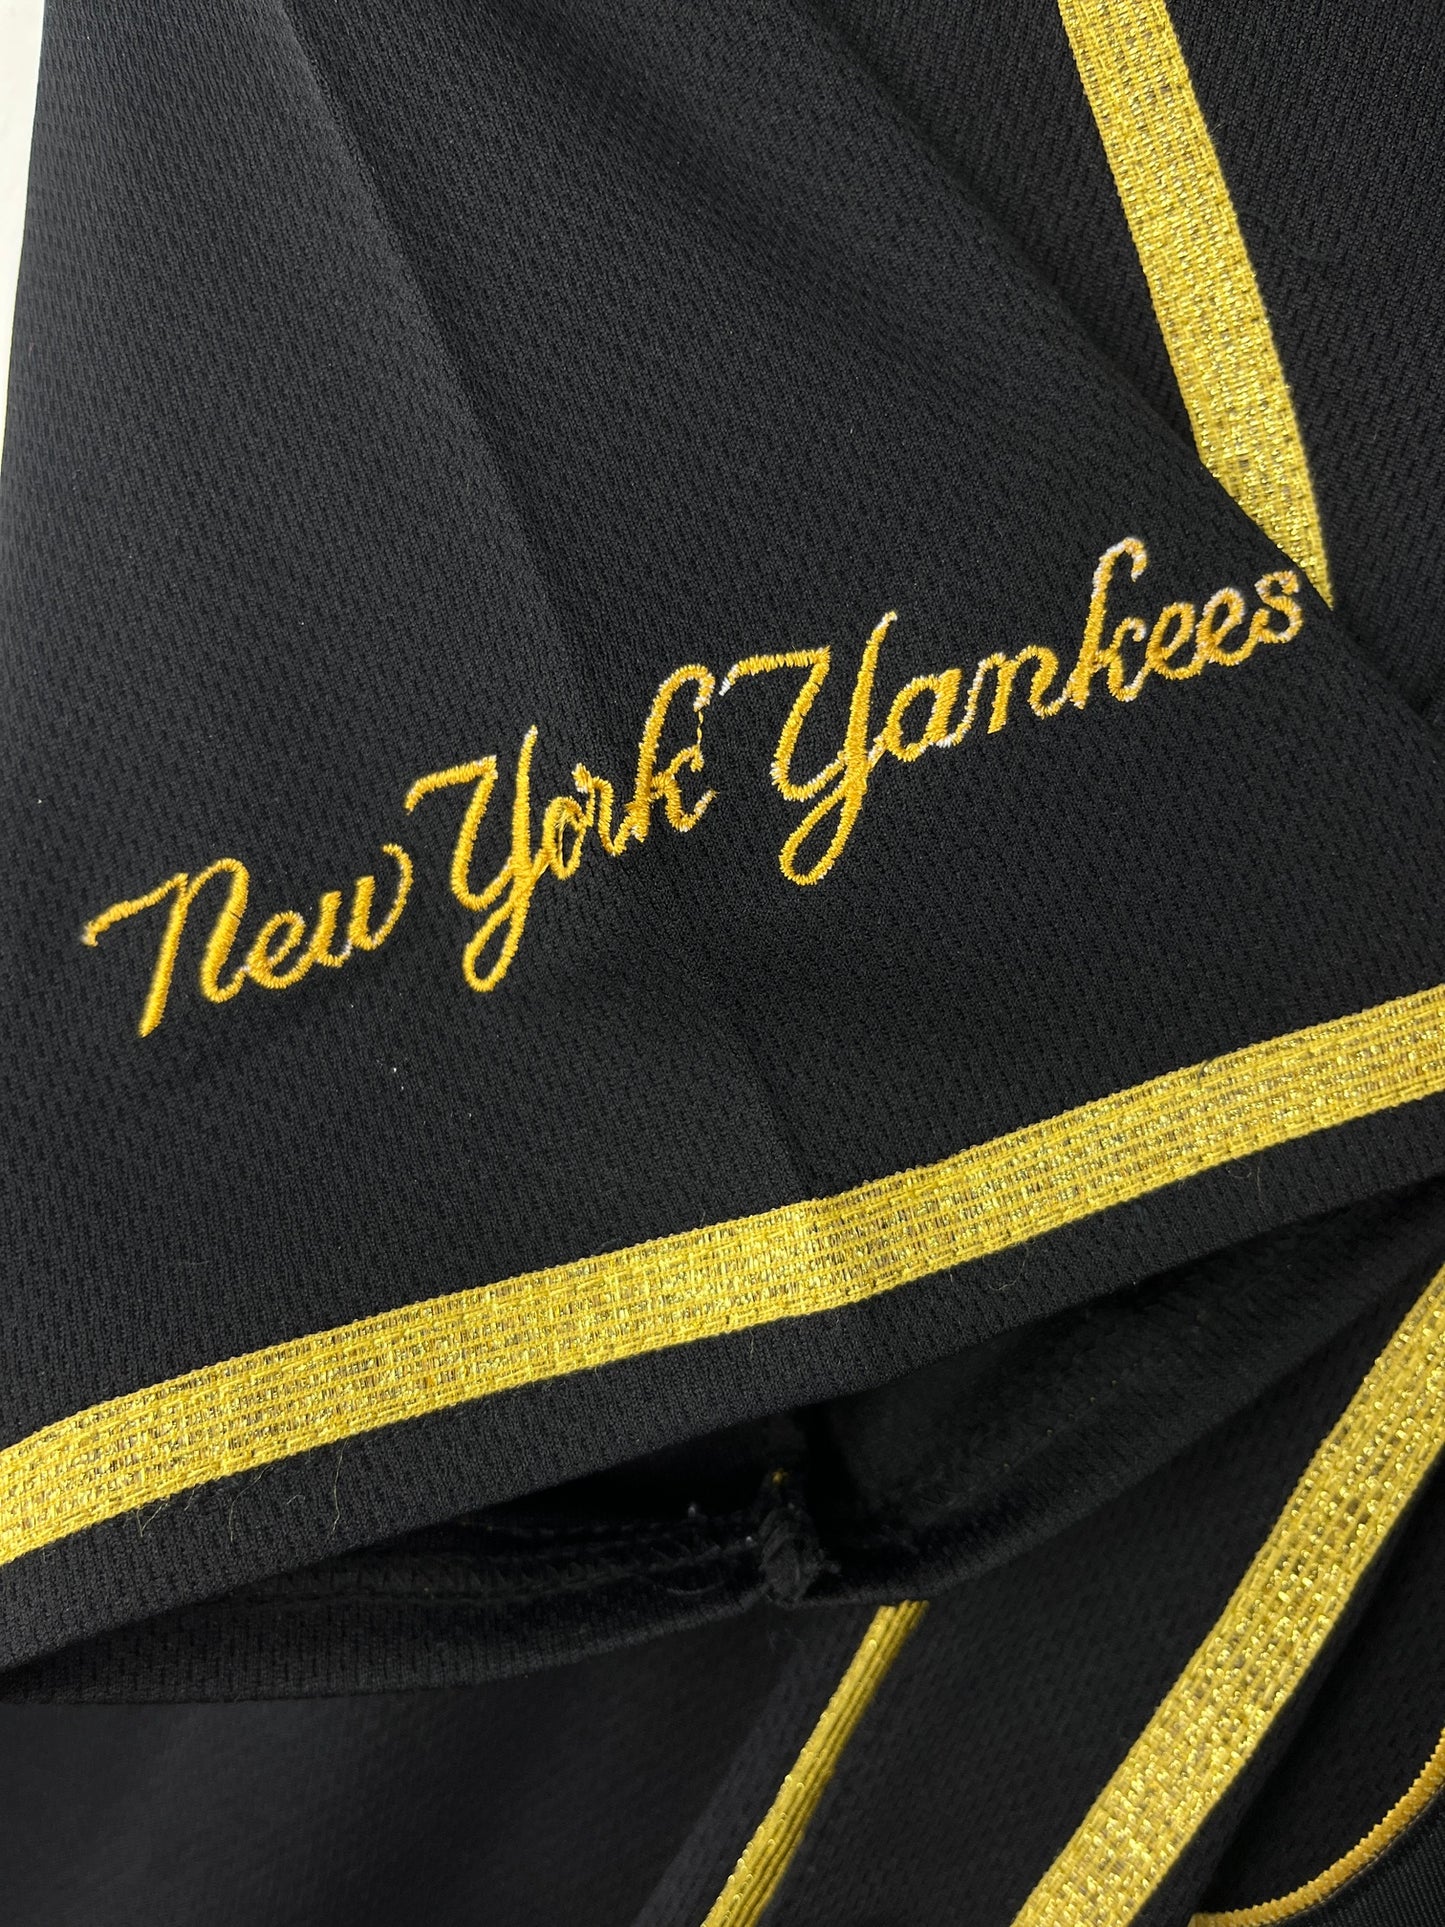 JETER 2 New York Yankees Black & Gold MLB Jersey